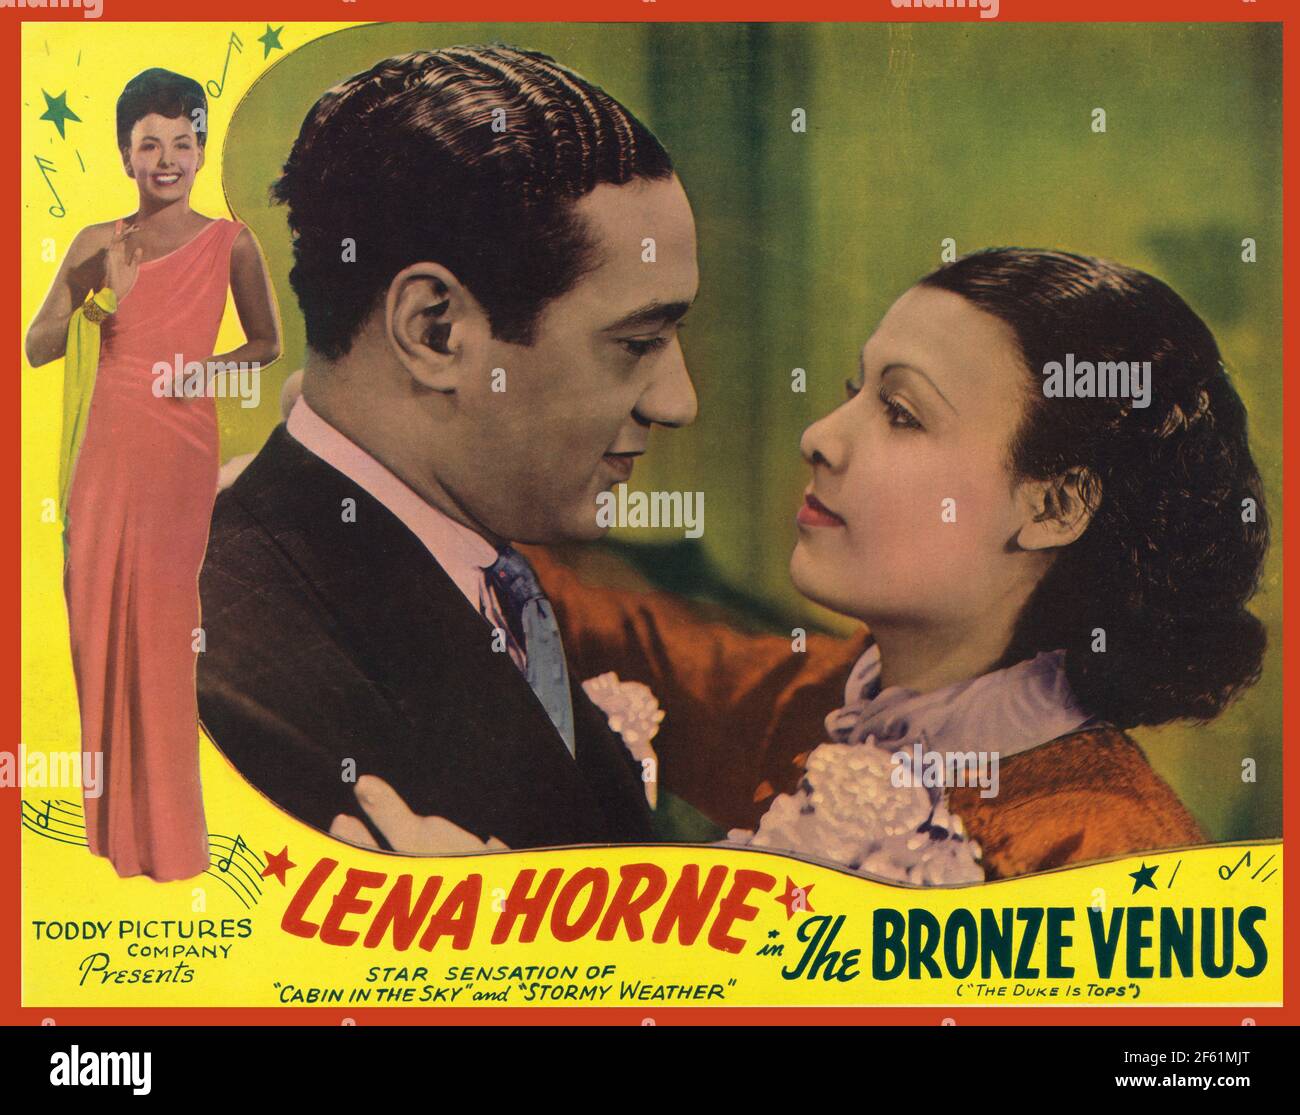 Lobby card for The Bronze Venus, 1943 Stock Photo